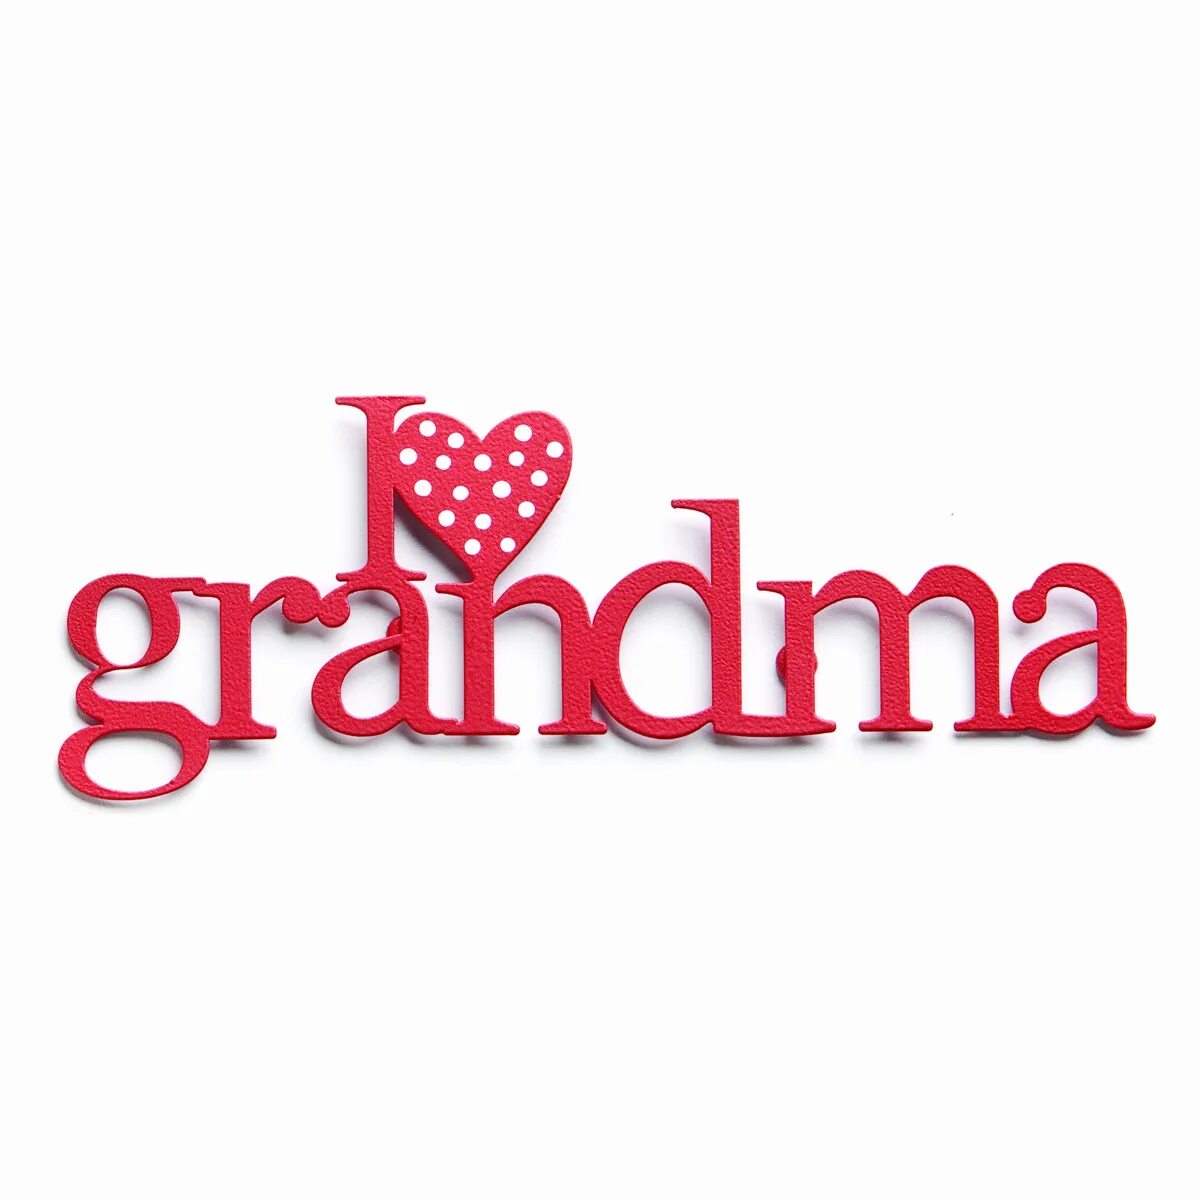 Grandma's love. My grandmother надпись. I Love grandma. Grand ma Love grandma. Beloved grandmother открытка.